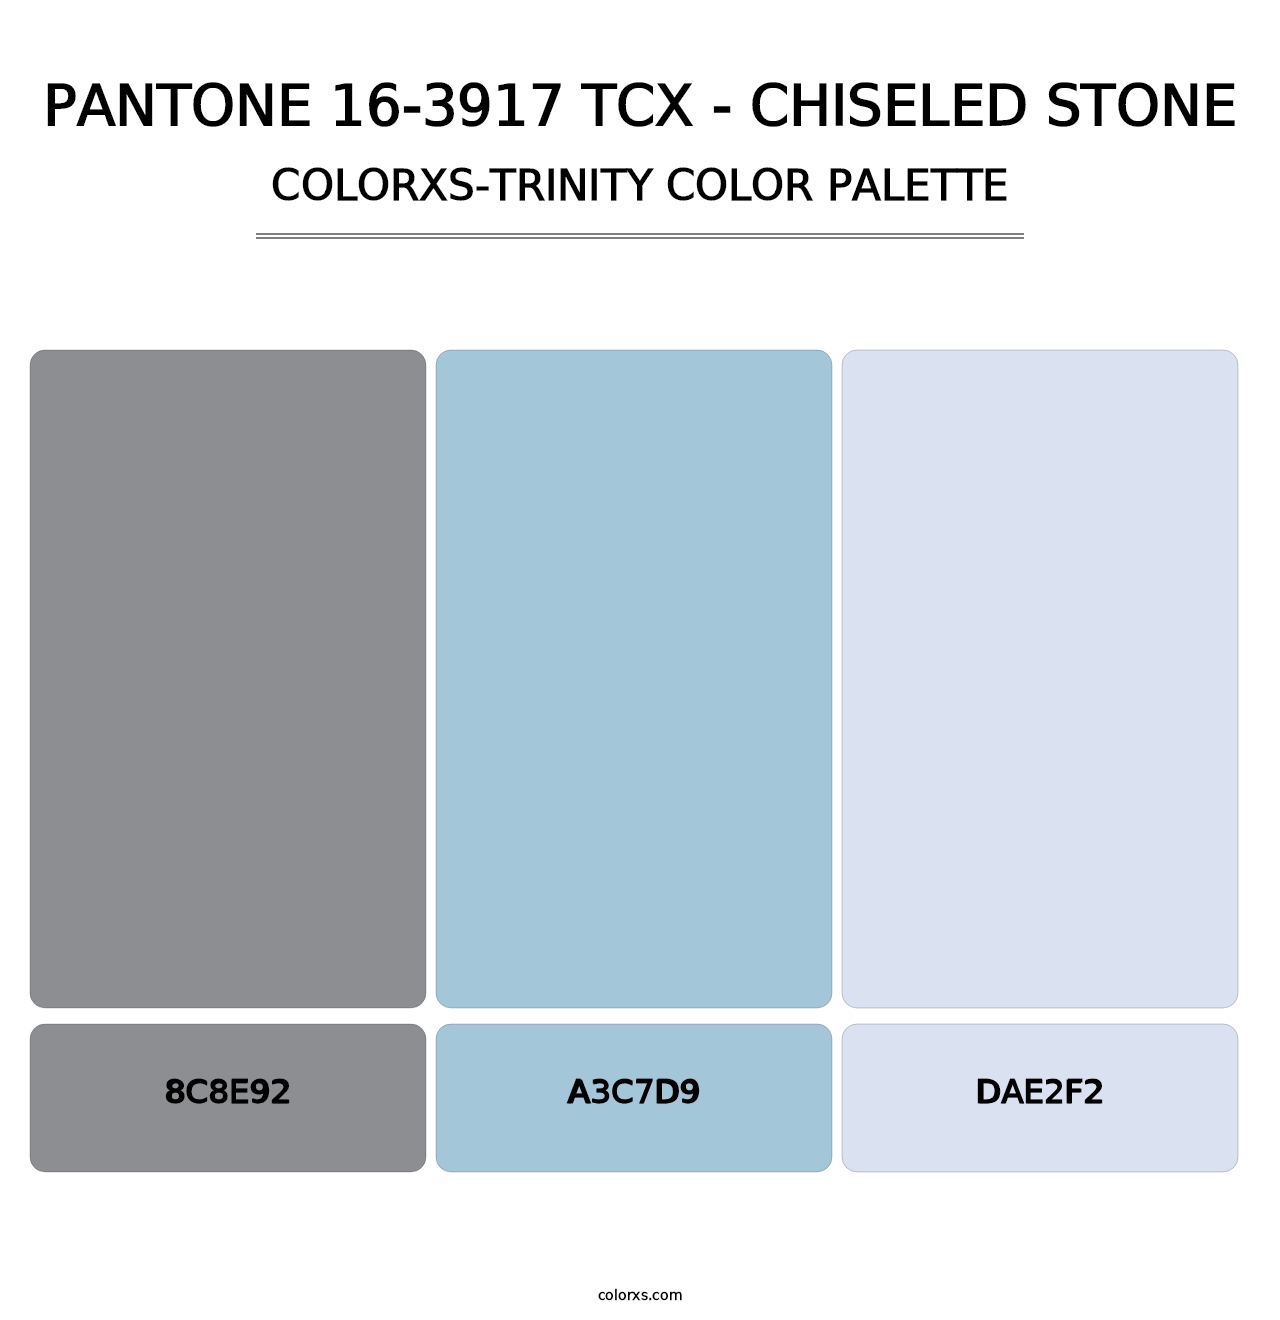 PANTONE 16-3917 TCX - Chiseled Stone - Colorxs Trinity Palette